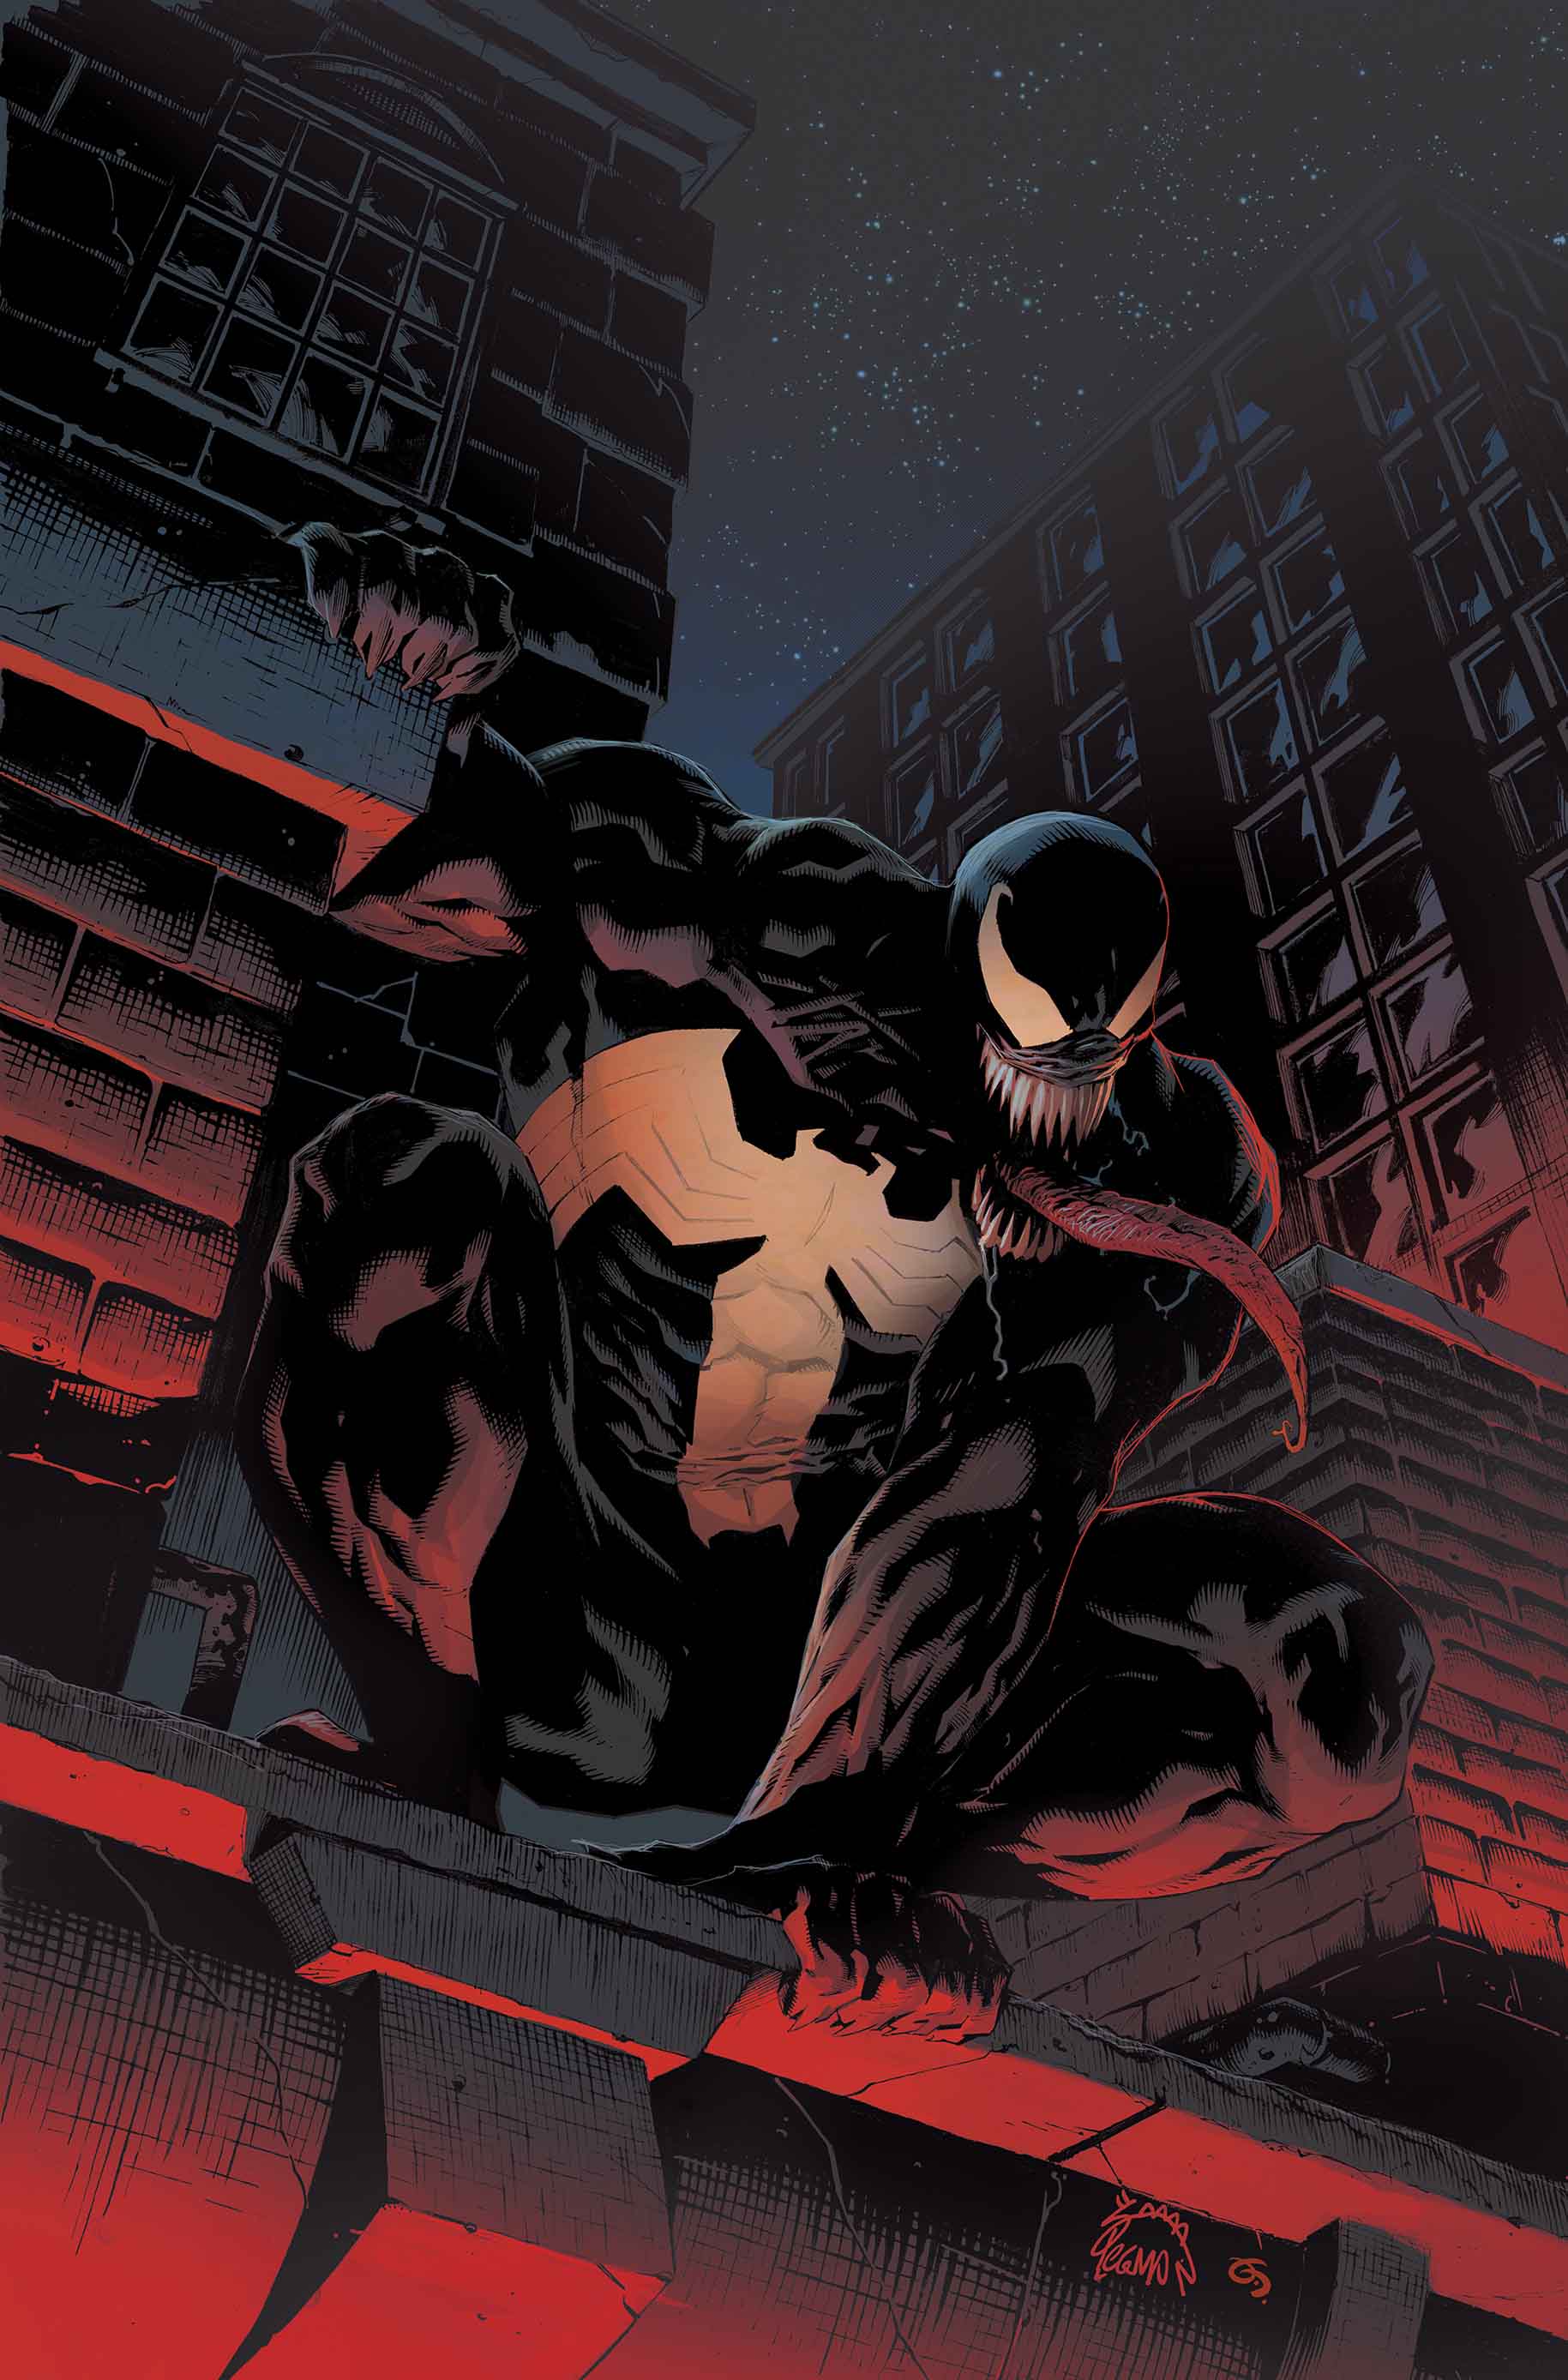 Venom #11